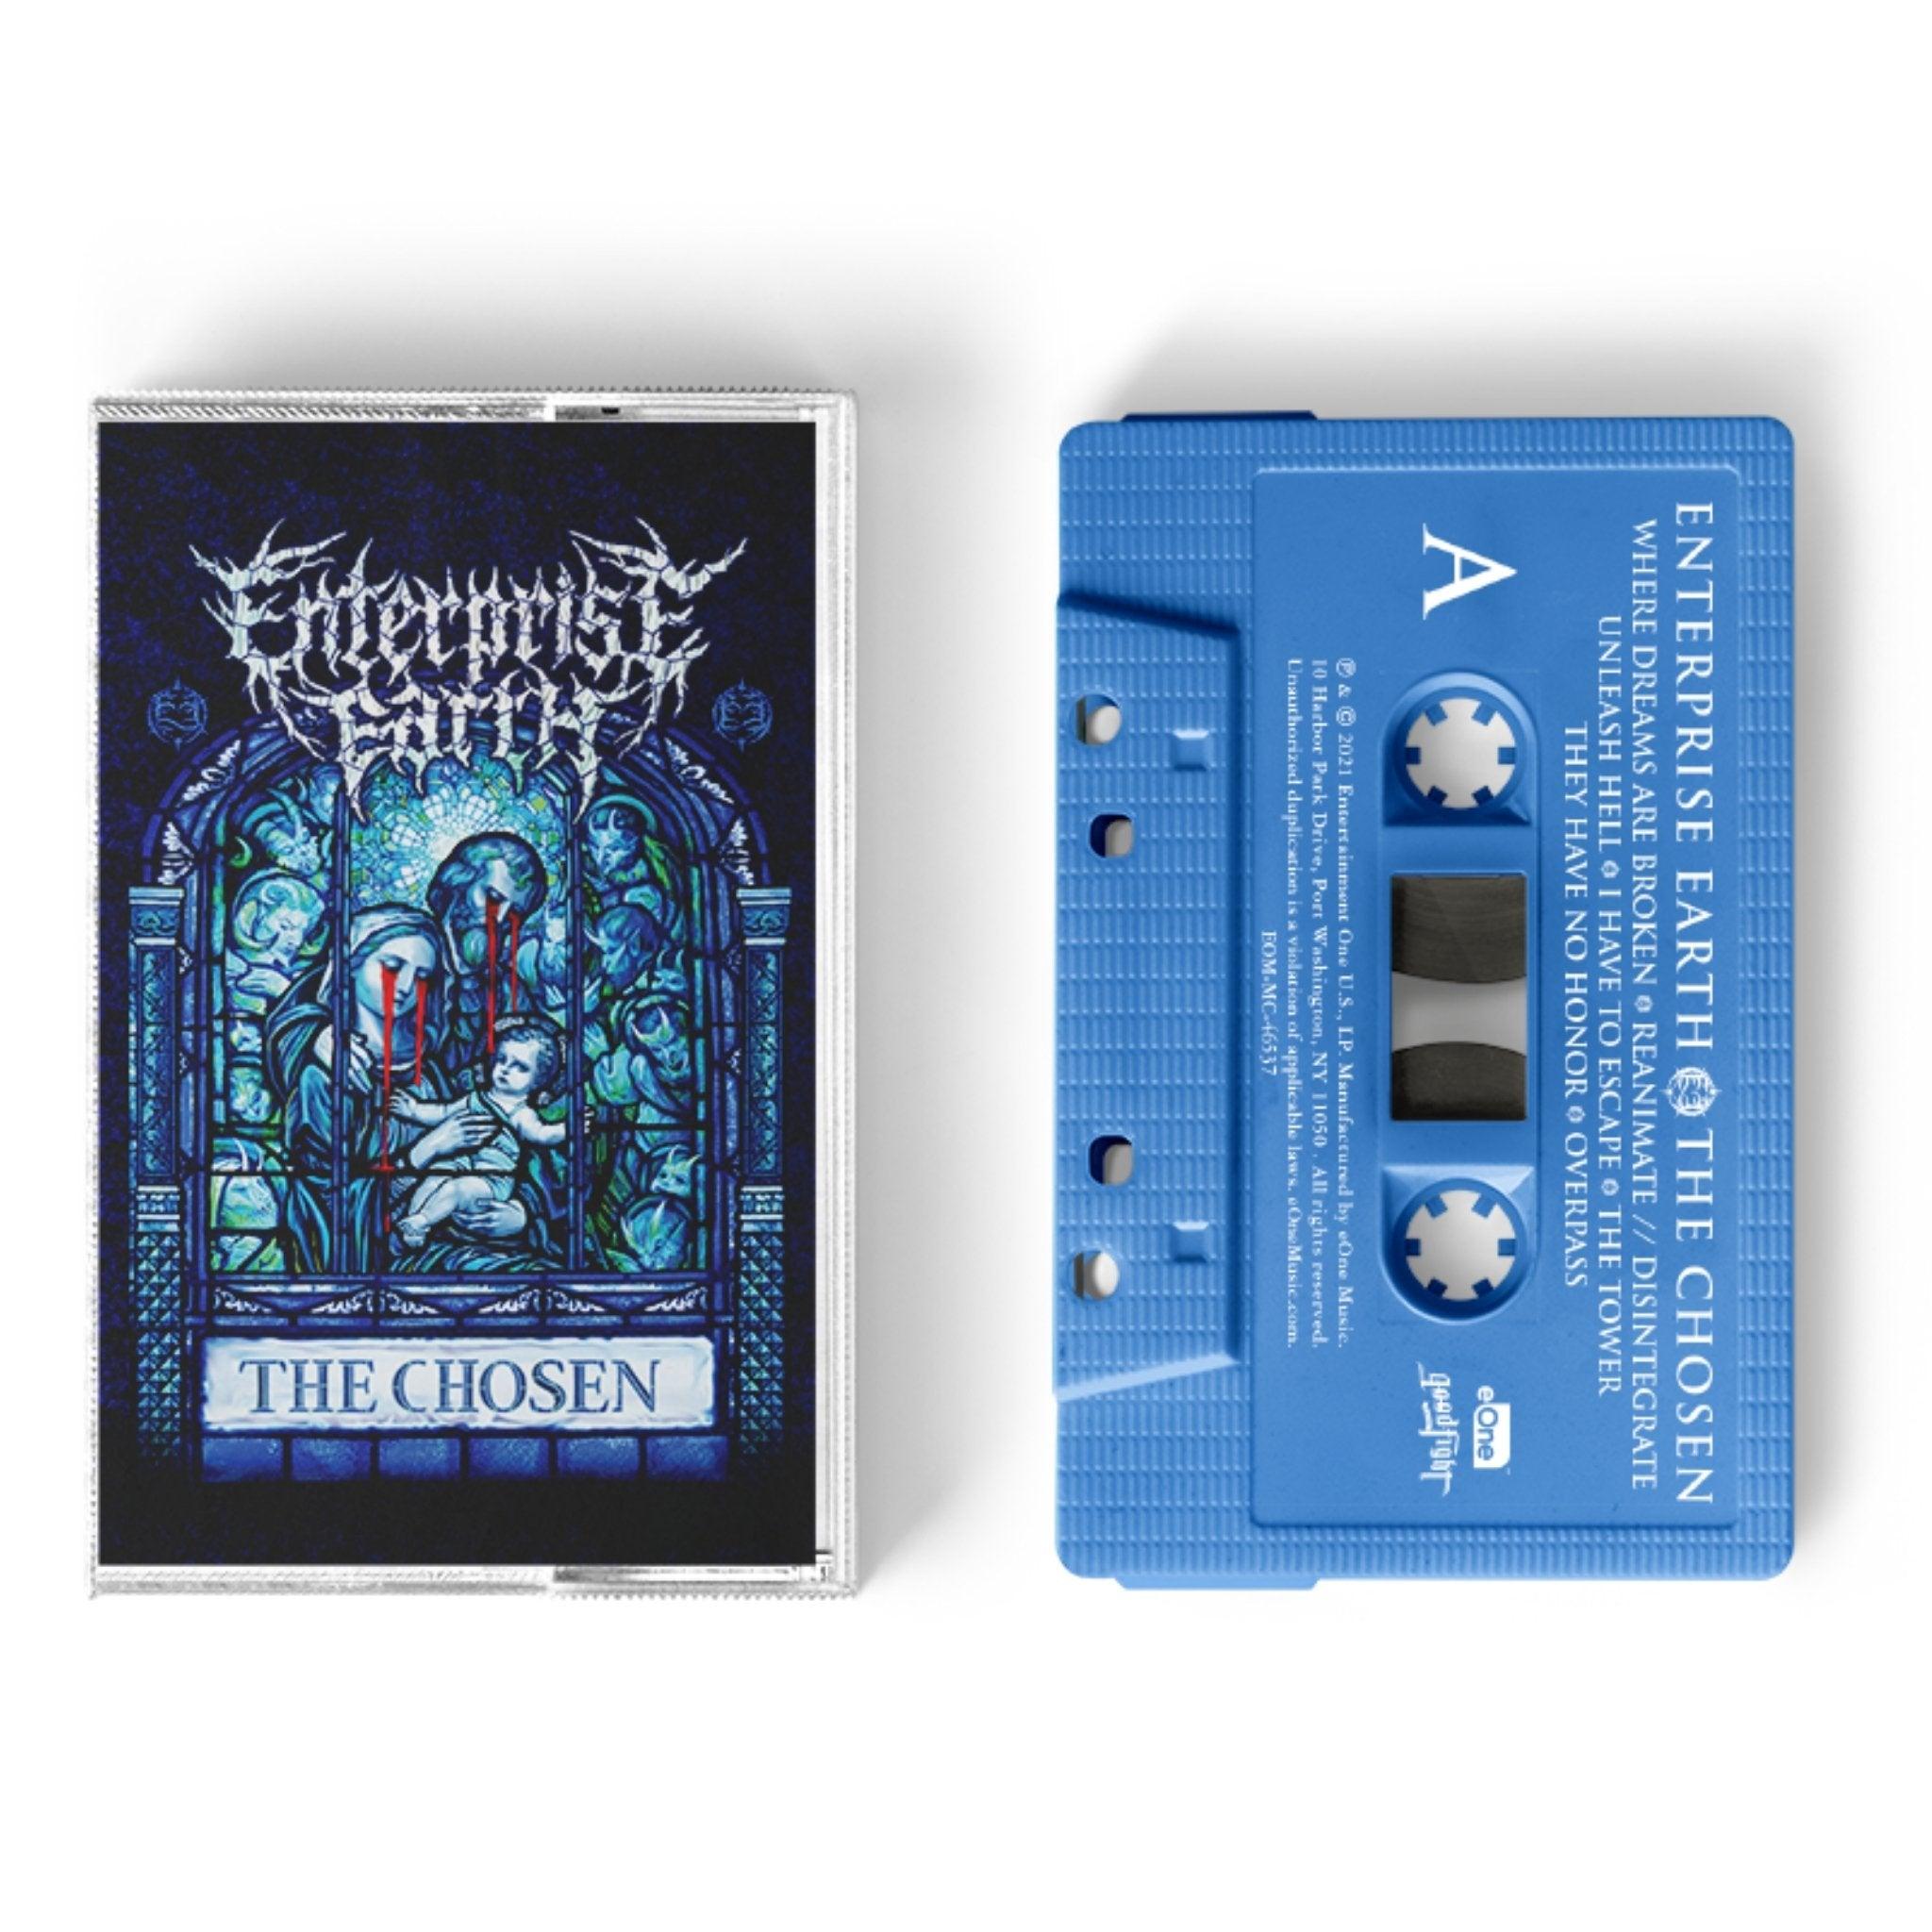 Enterprise Earth The Chosen Deluxe Edition Box Set Cassette